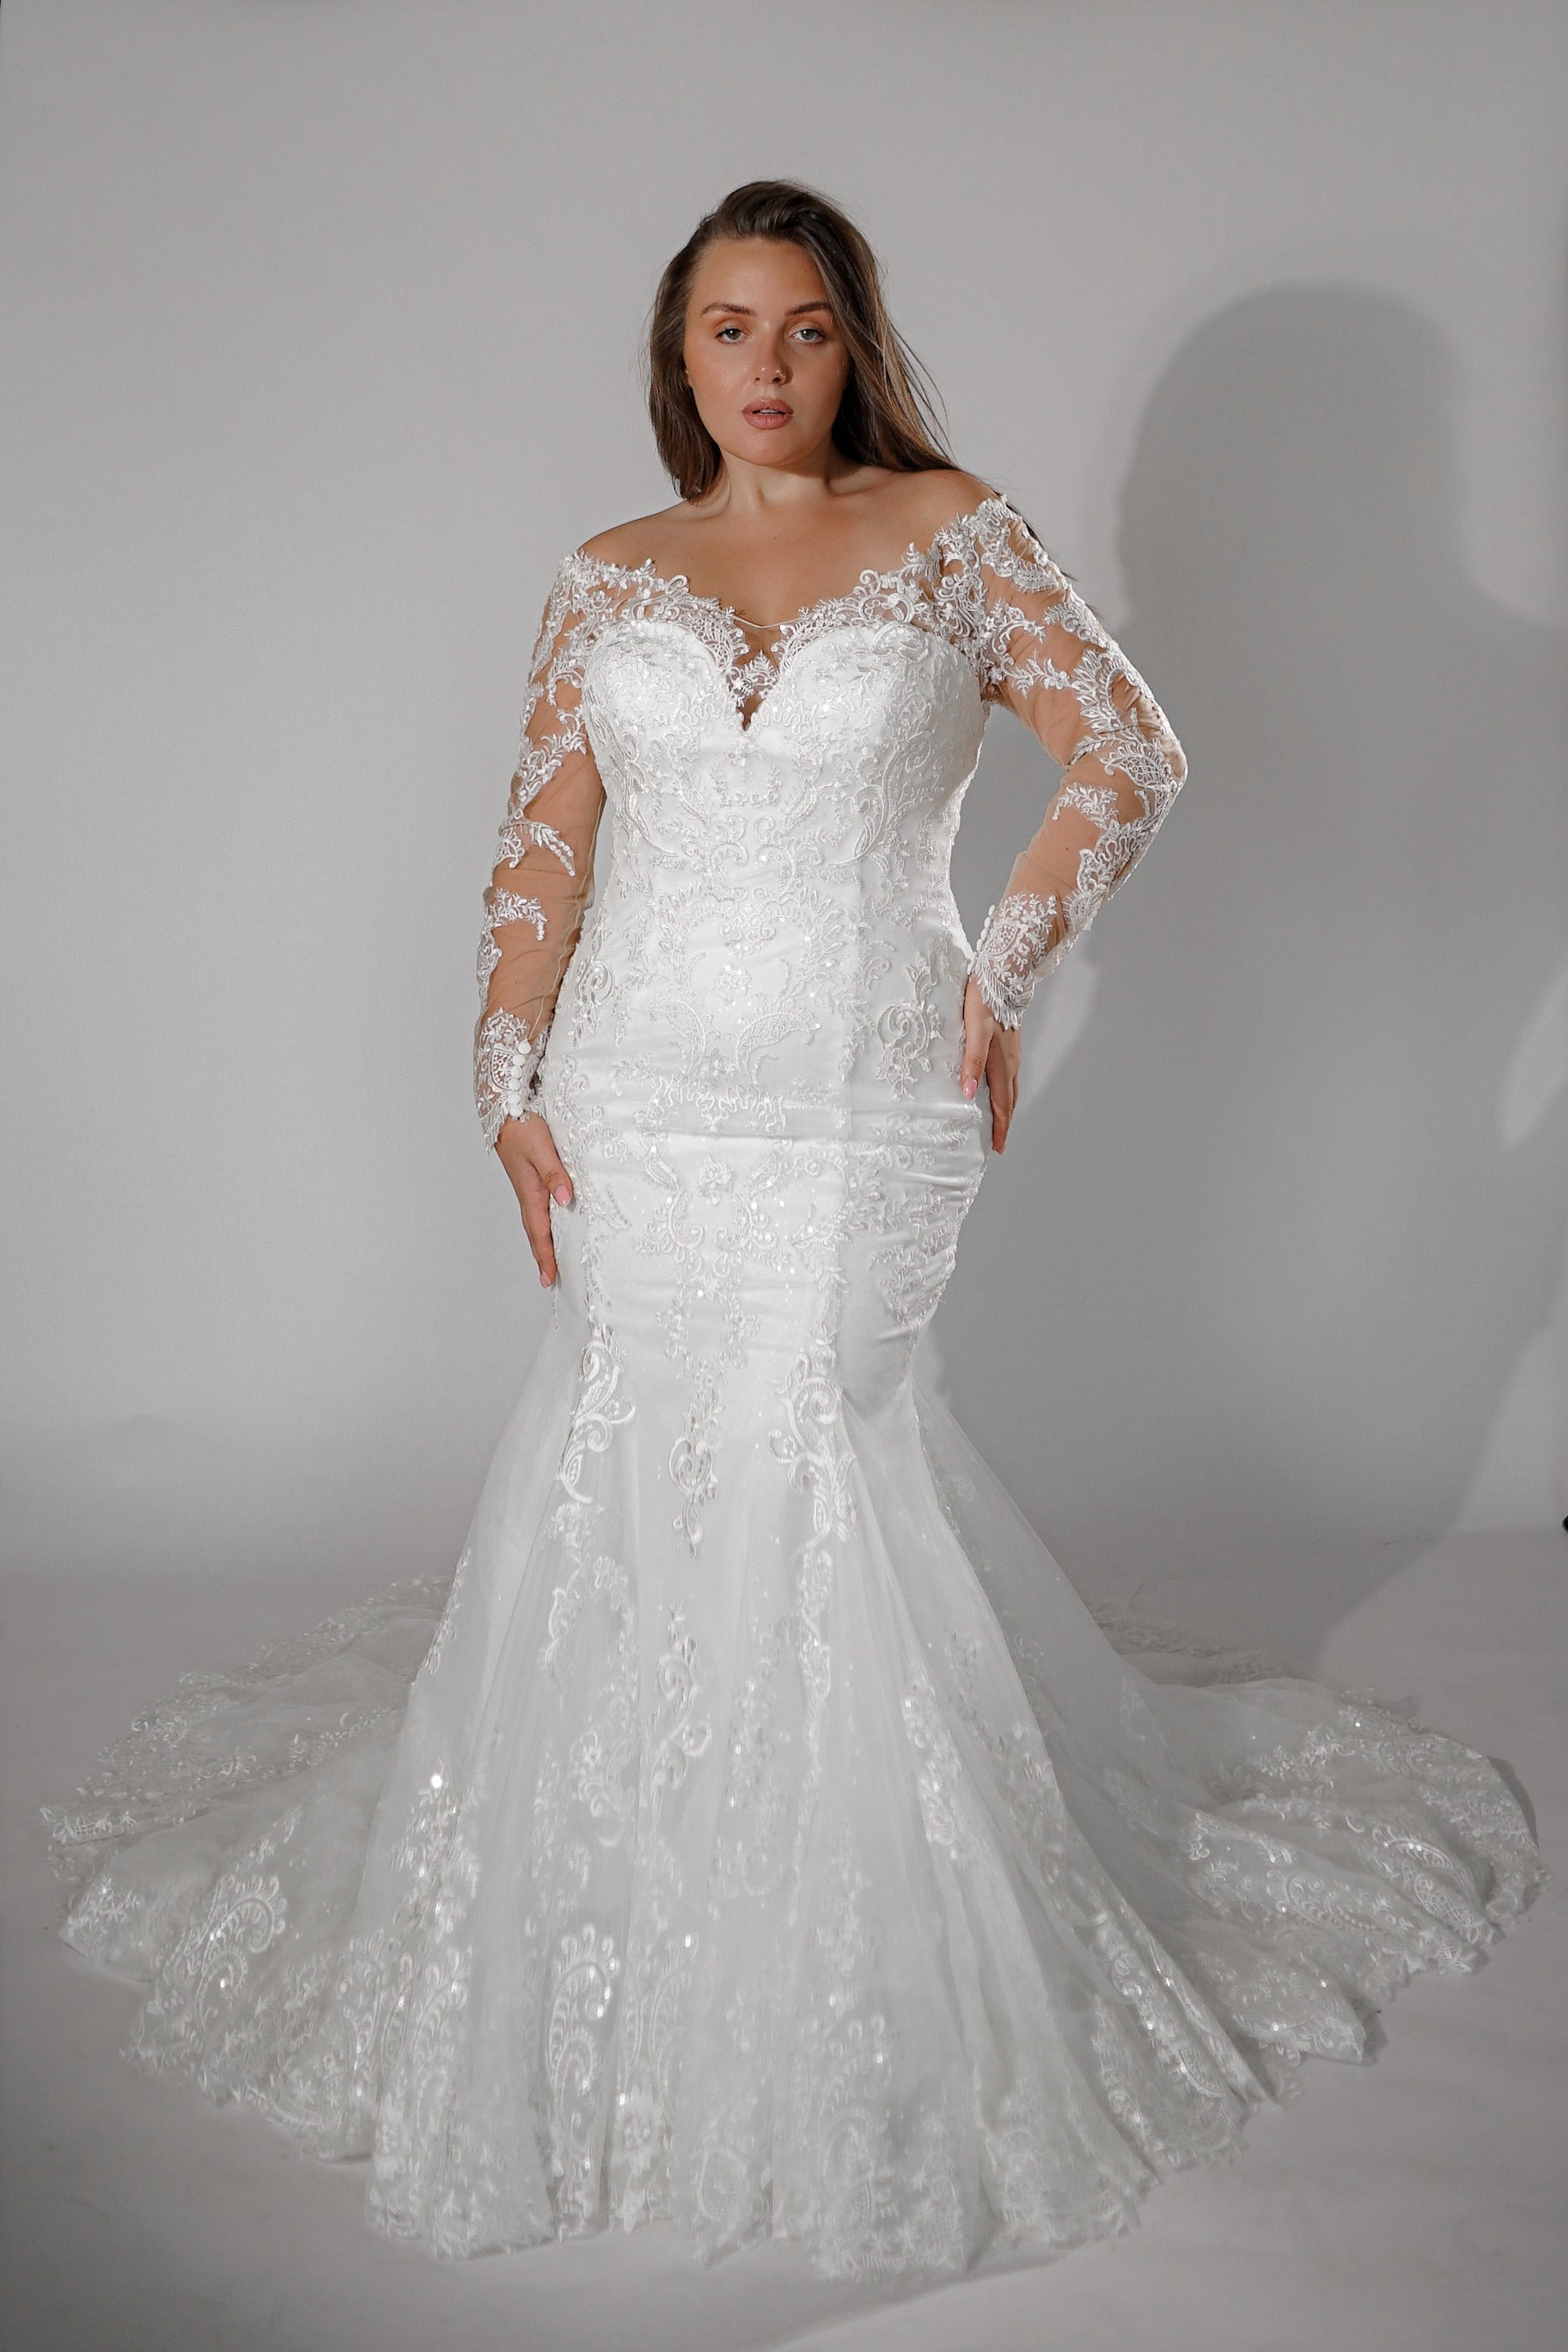 Plus Size Bridal Dress, 48% OFF